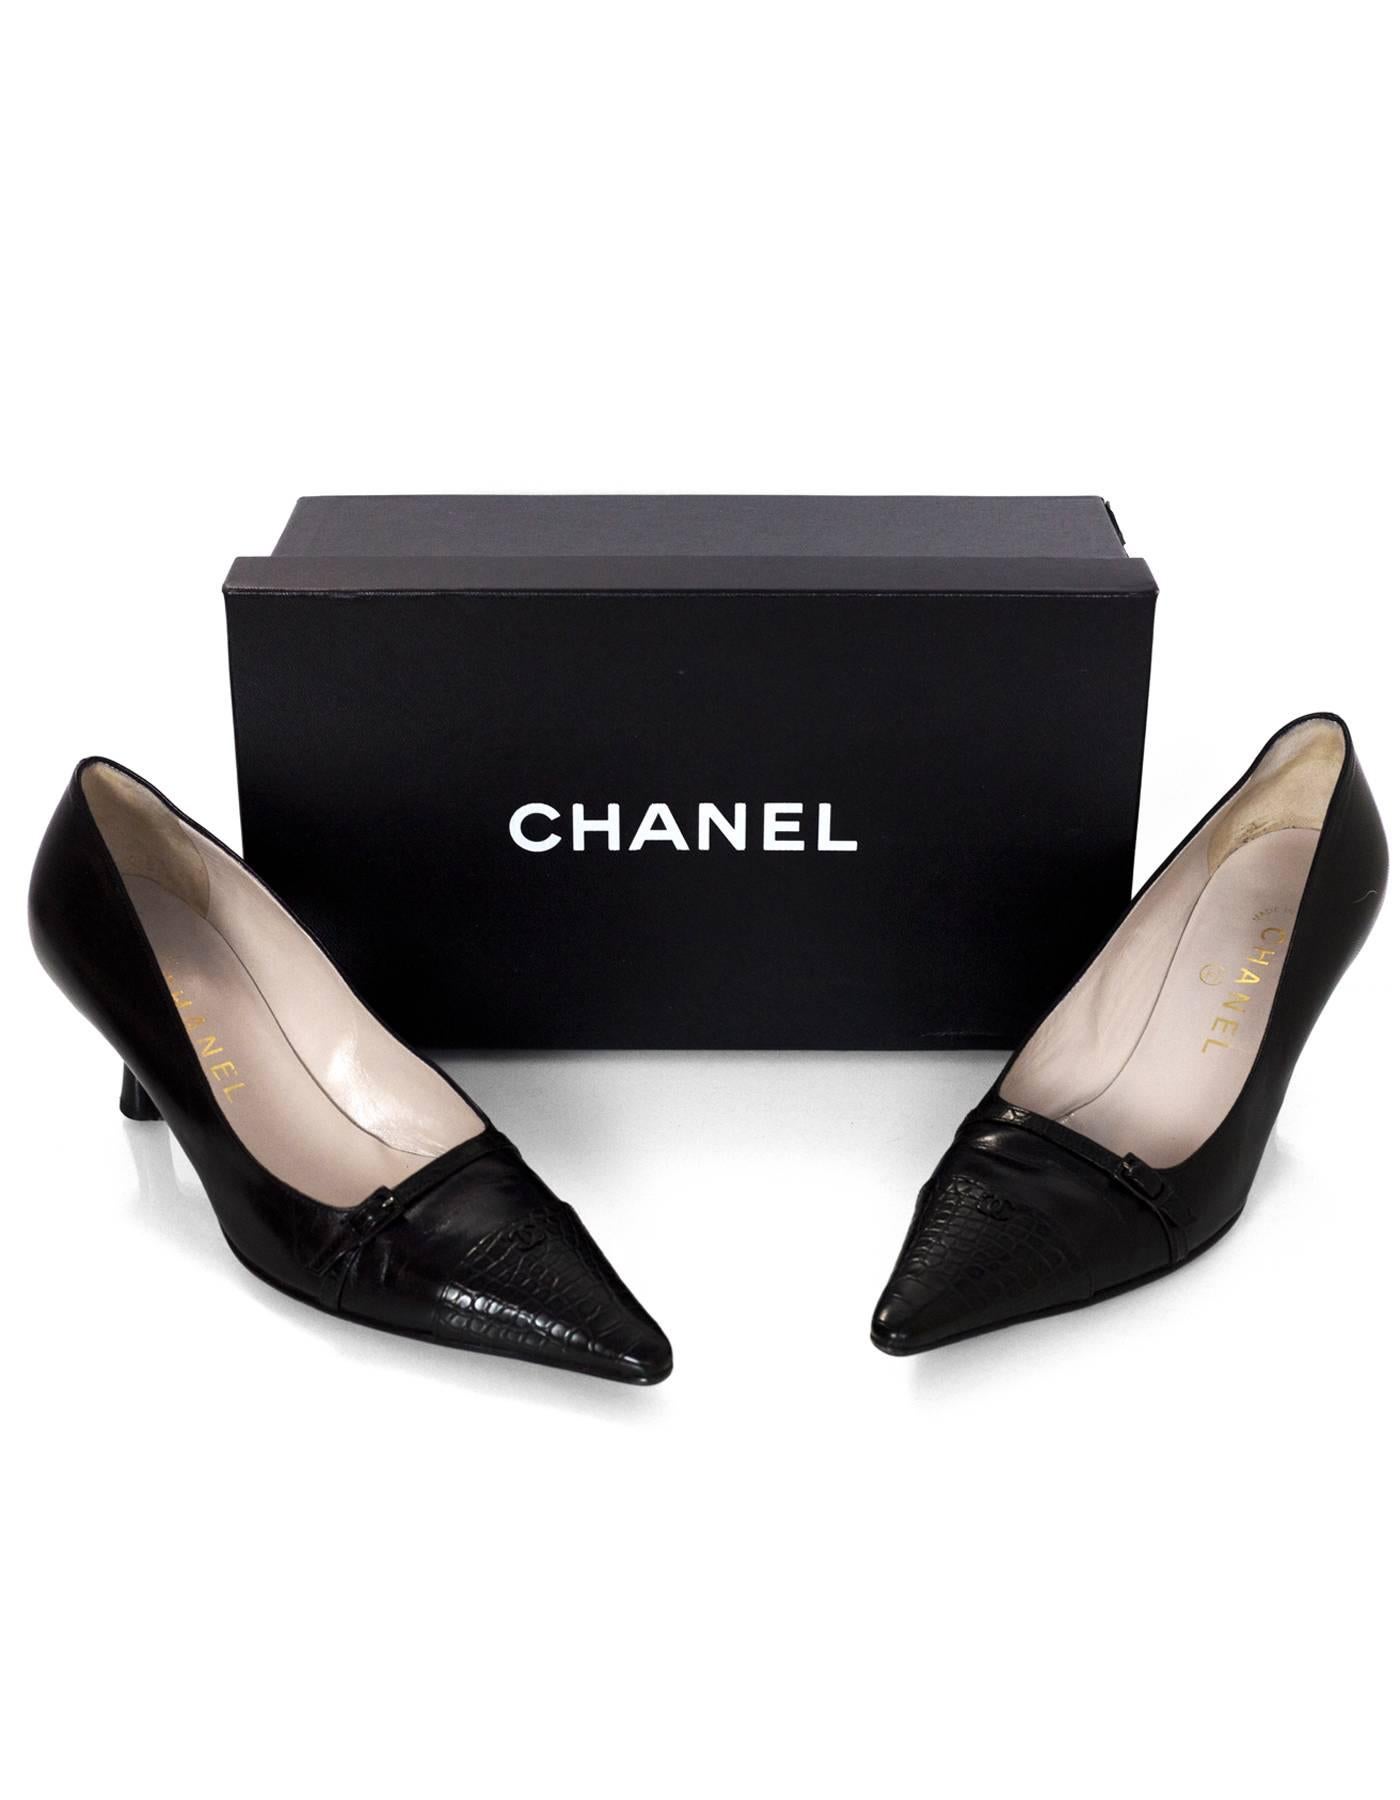 Chanel Black Leather Kitten Heels Sz 37 with Box 1